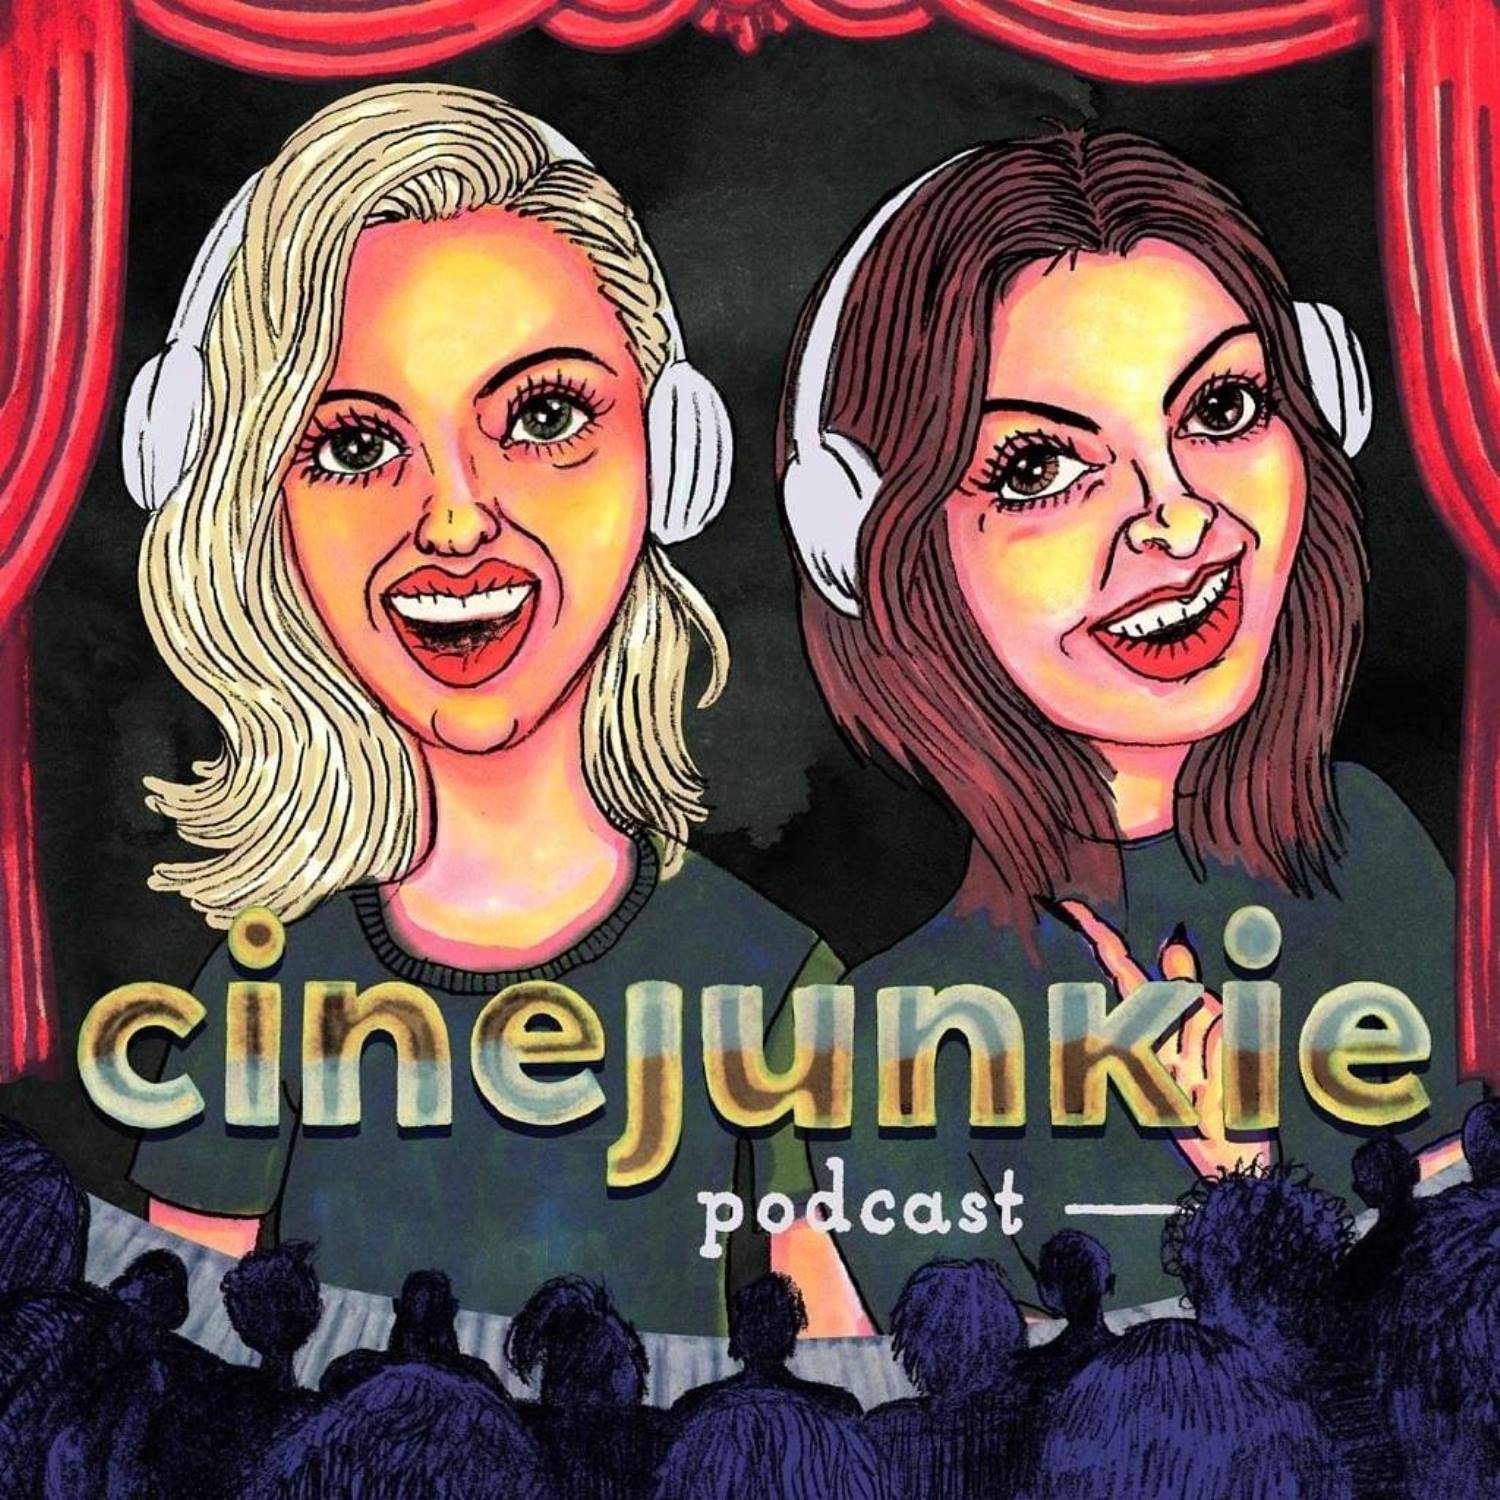 Artwork for podcast CineJunkie Podcast